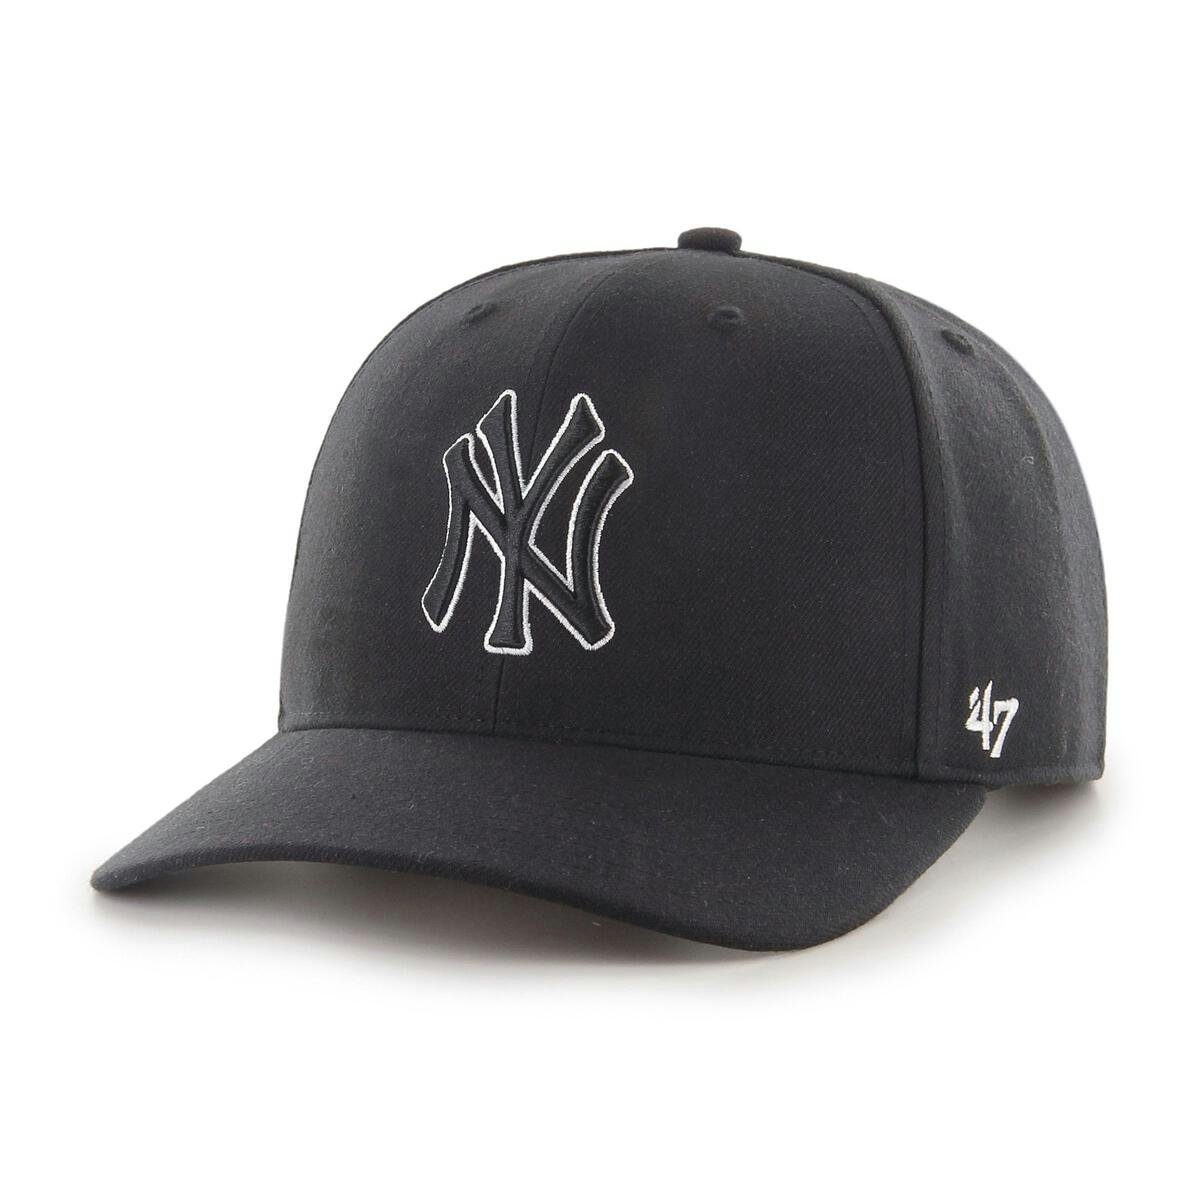 '47 Zone '47 Brand Cold New Brand York Cap Yankees Cap MLB '47 Baseball